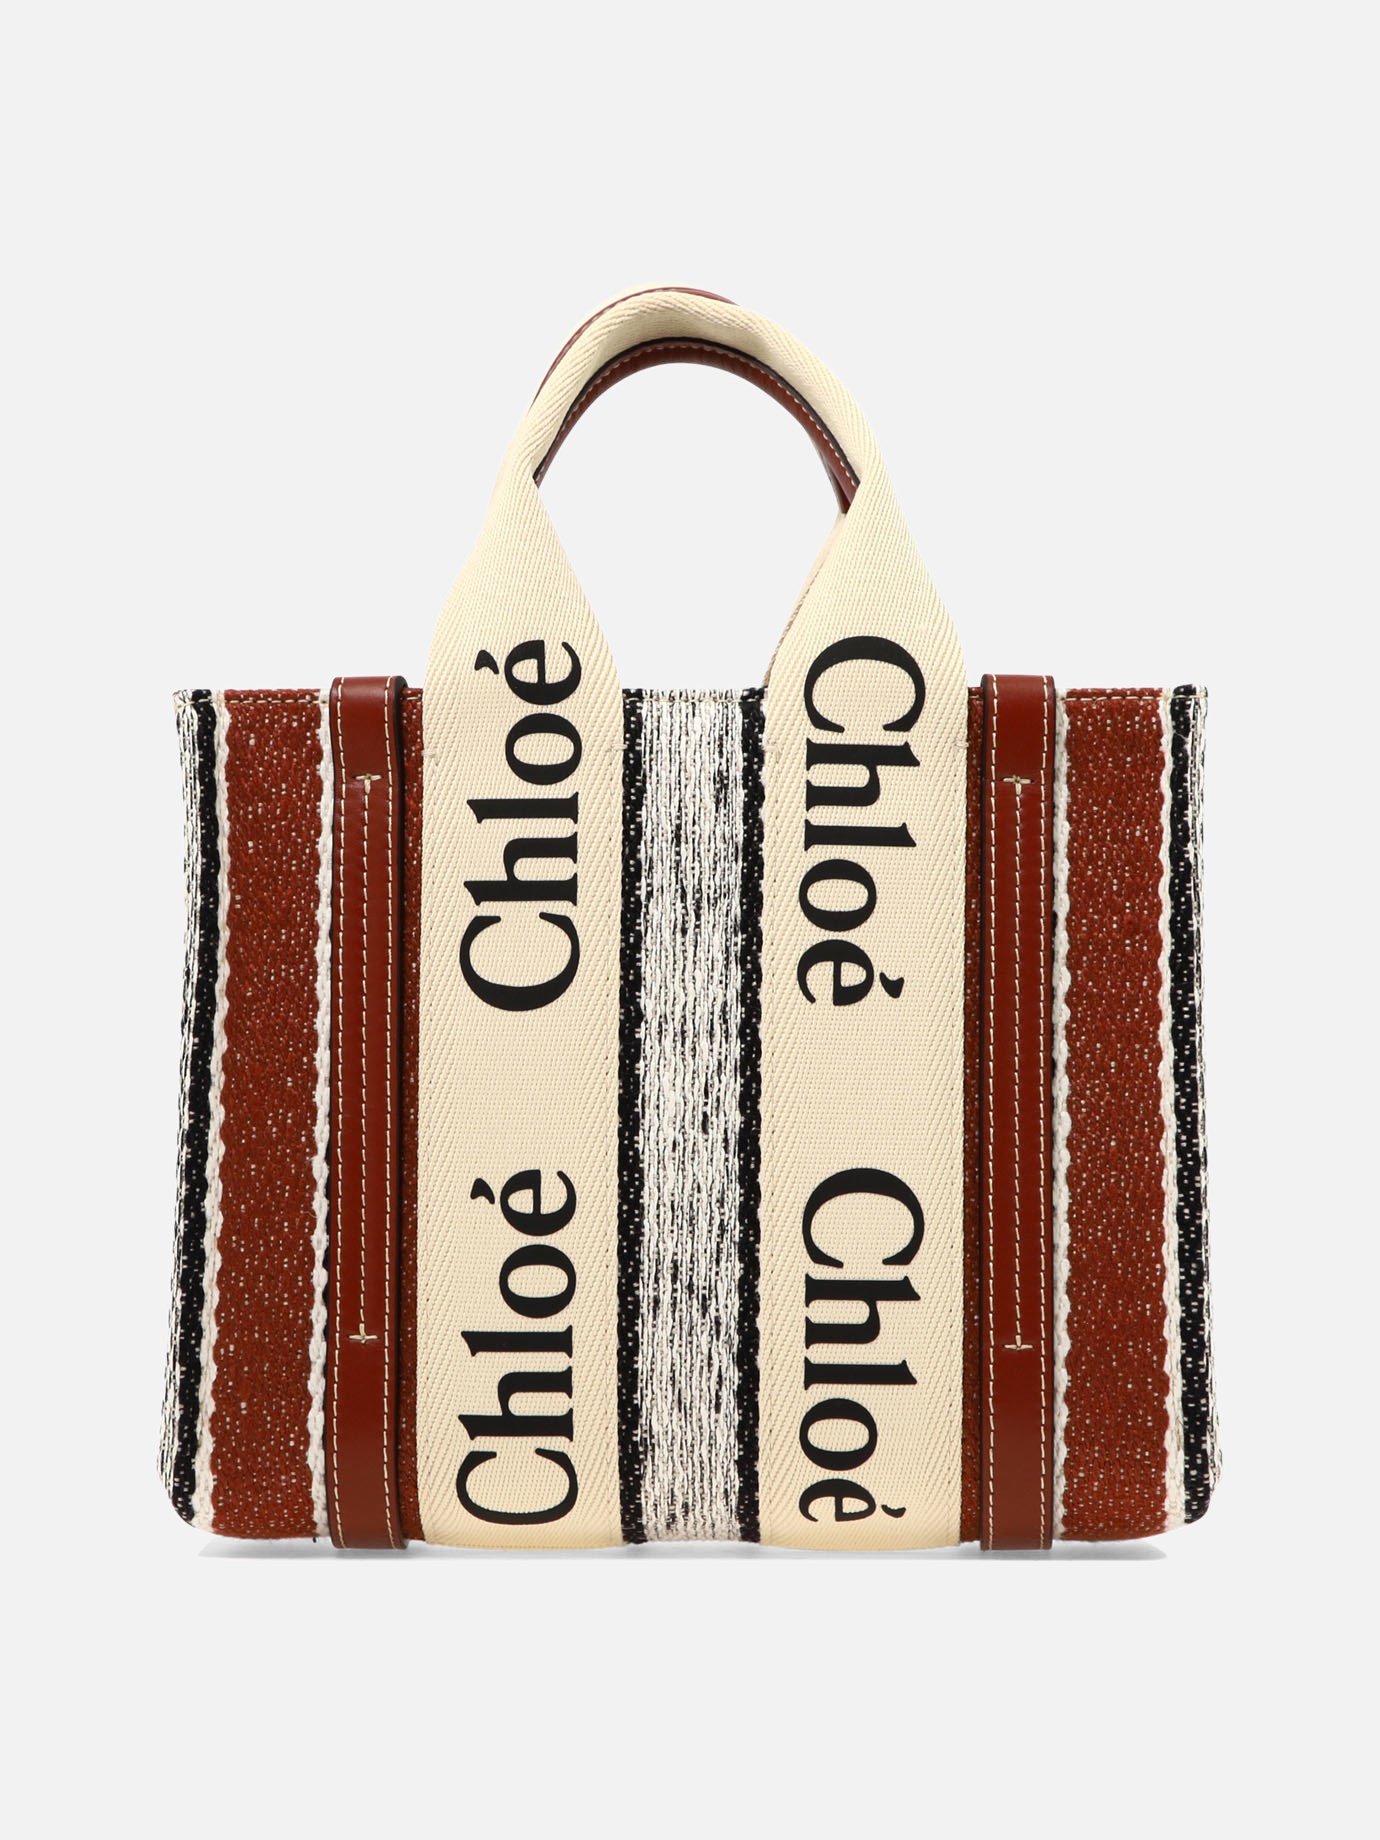  Woody  handbag by Chloé